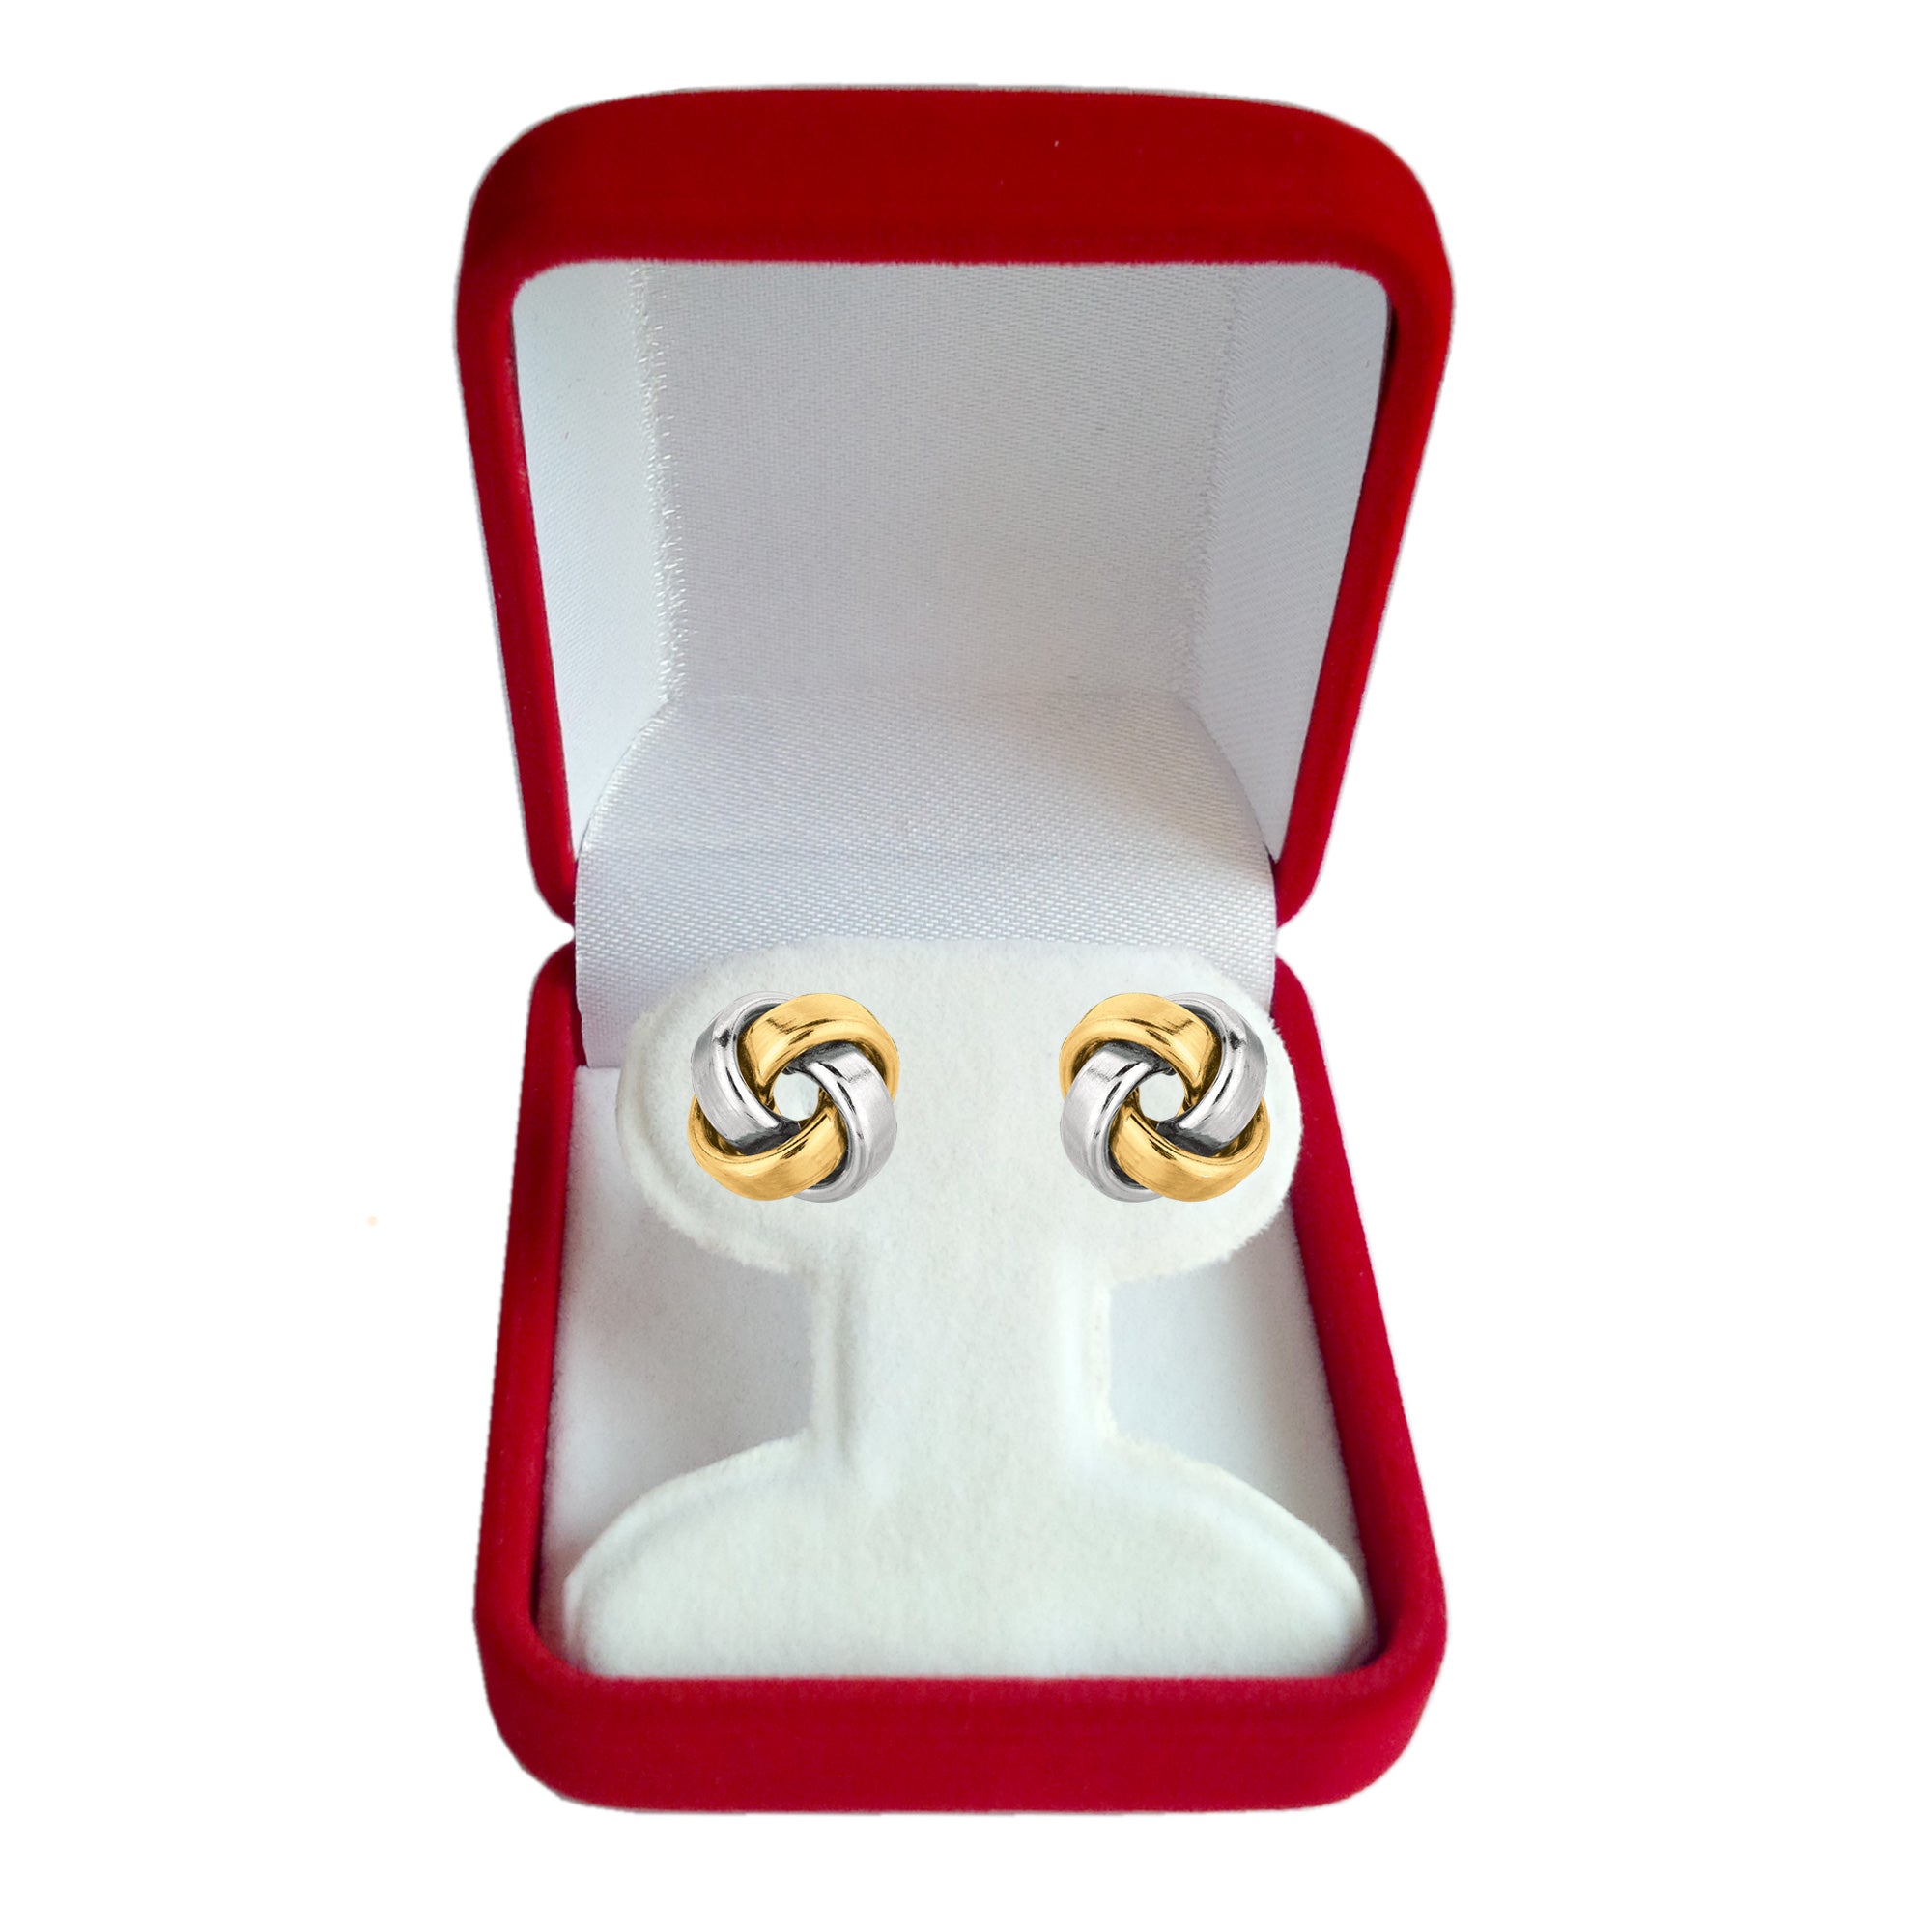 14k Gold Shiny Square Tube Love Knot Stud Earrings, 10mm fine designer jewelry for men and women